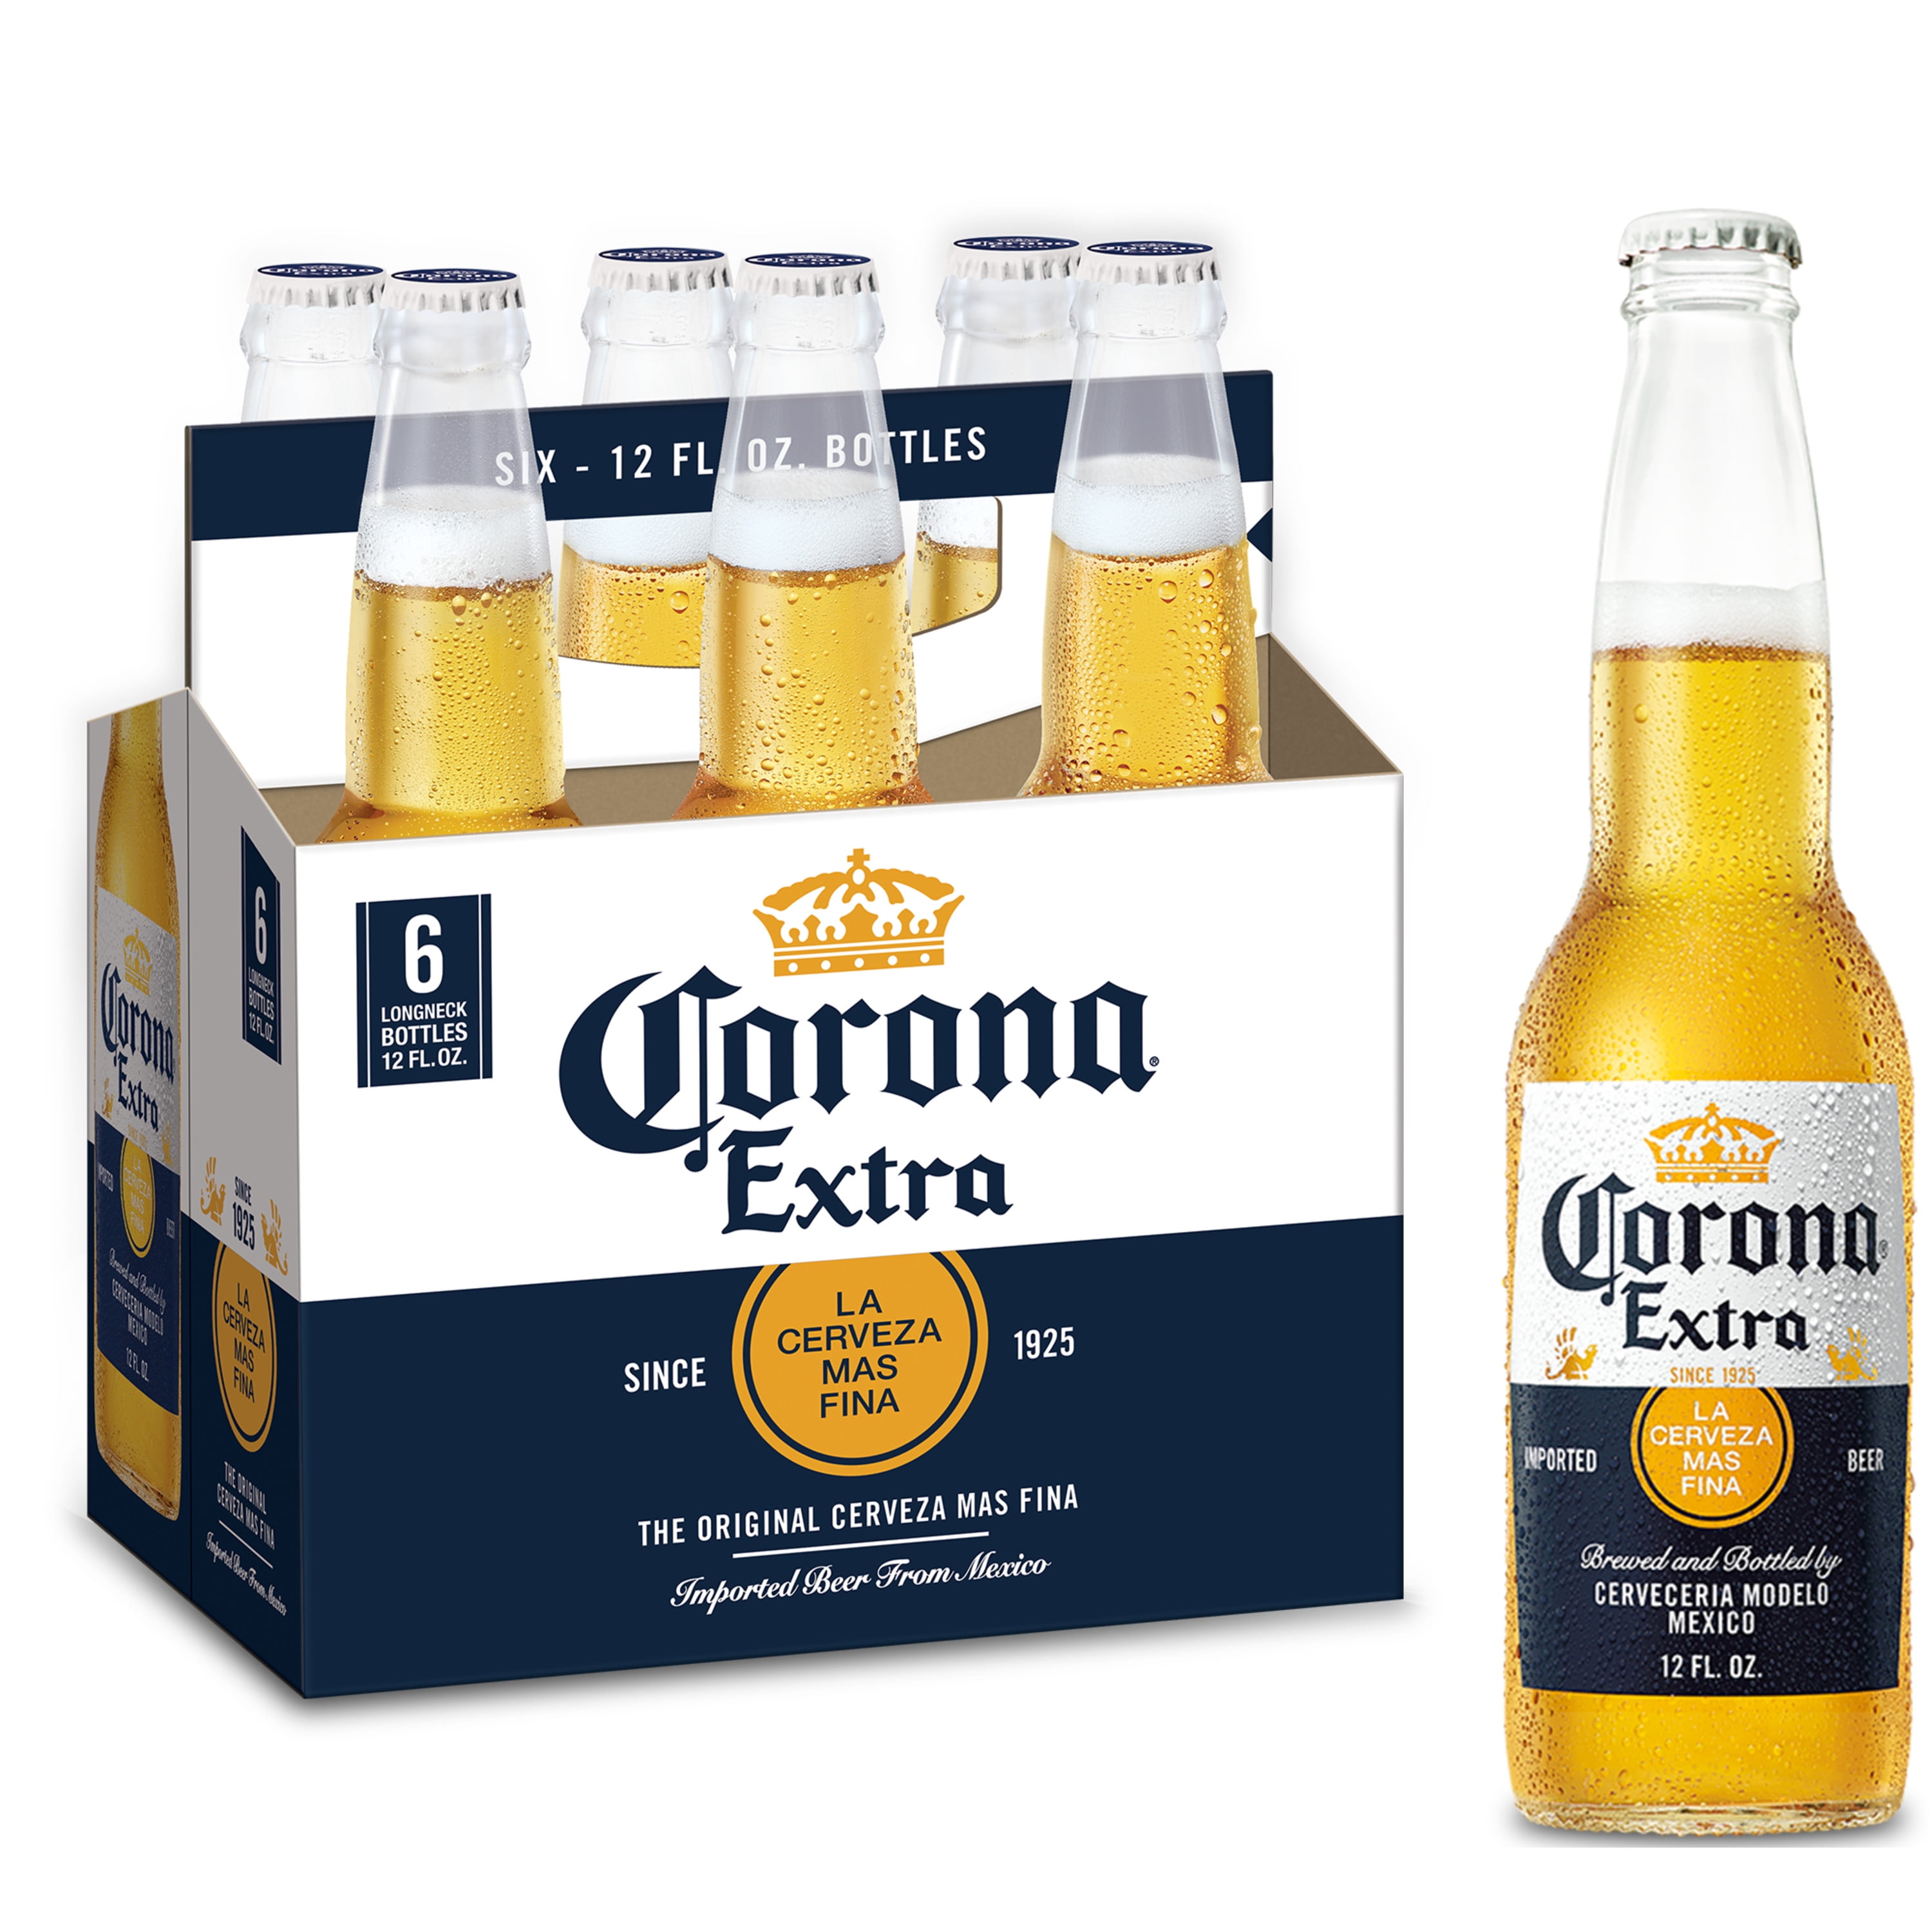 global Mañana Armonía Corona Extra Beer Mexican Lager, Beer 6 Pack, 12 fl oz Bottles, 4.6% ABV -  Walmart.com